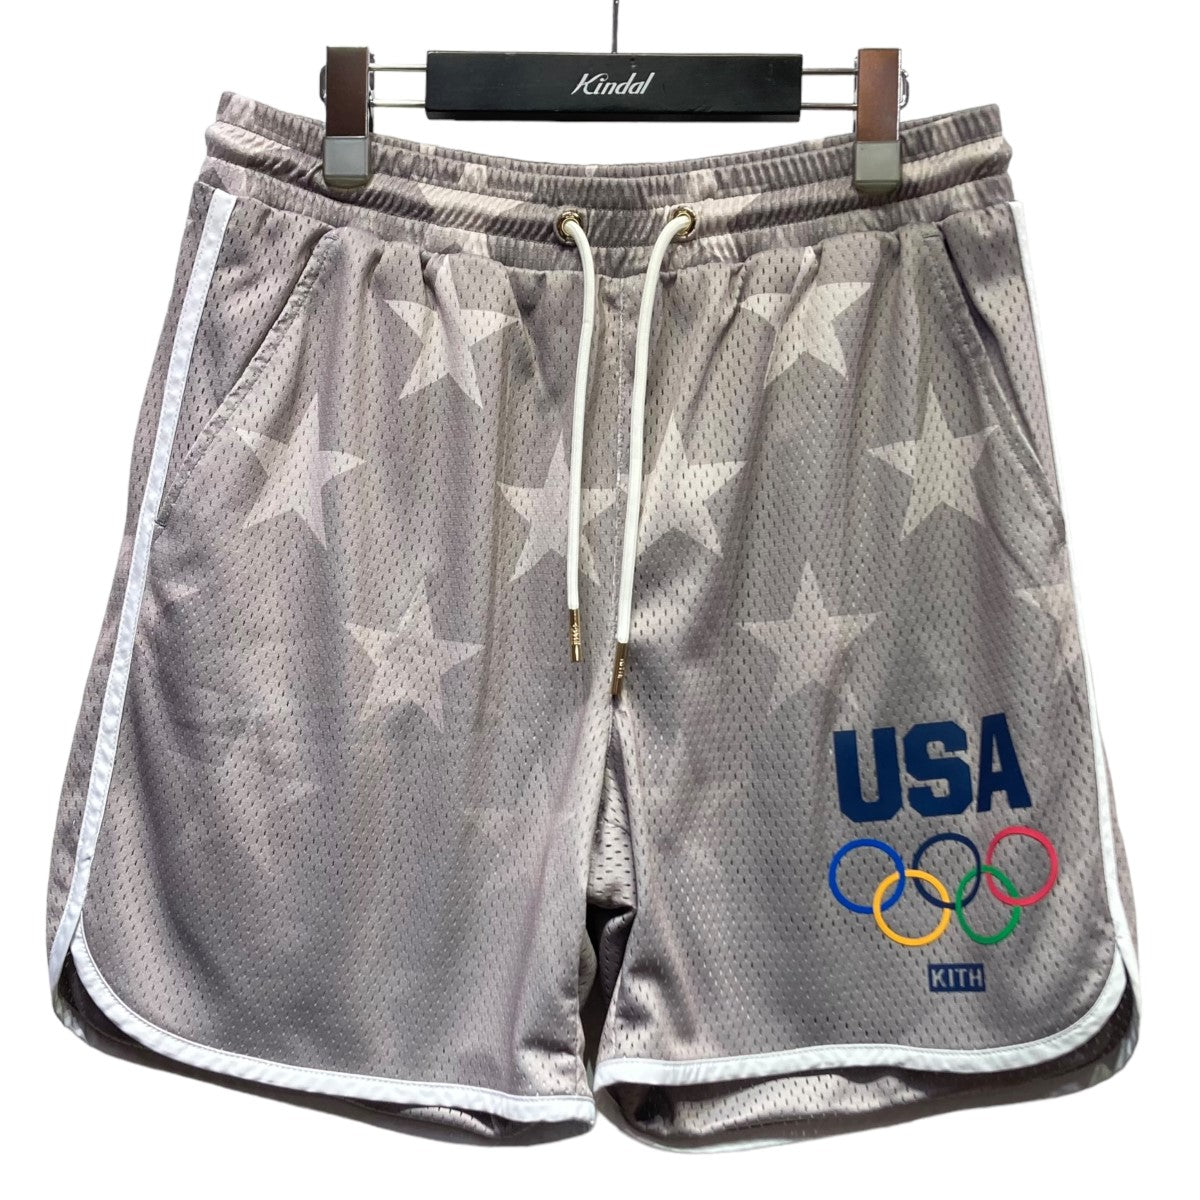 KITH(キス) Kith for Team USA Stars Jordan Mesh Short　ショートパンツ 140659 ライトグレー  サイズ S｜【公式】カインドオルオンライン ブランド古着・中古通販【kindal】